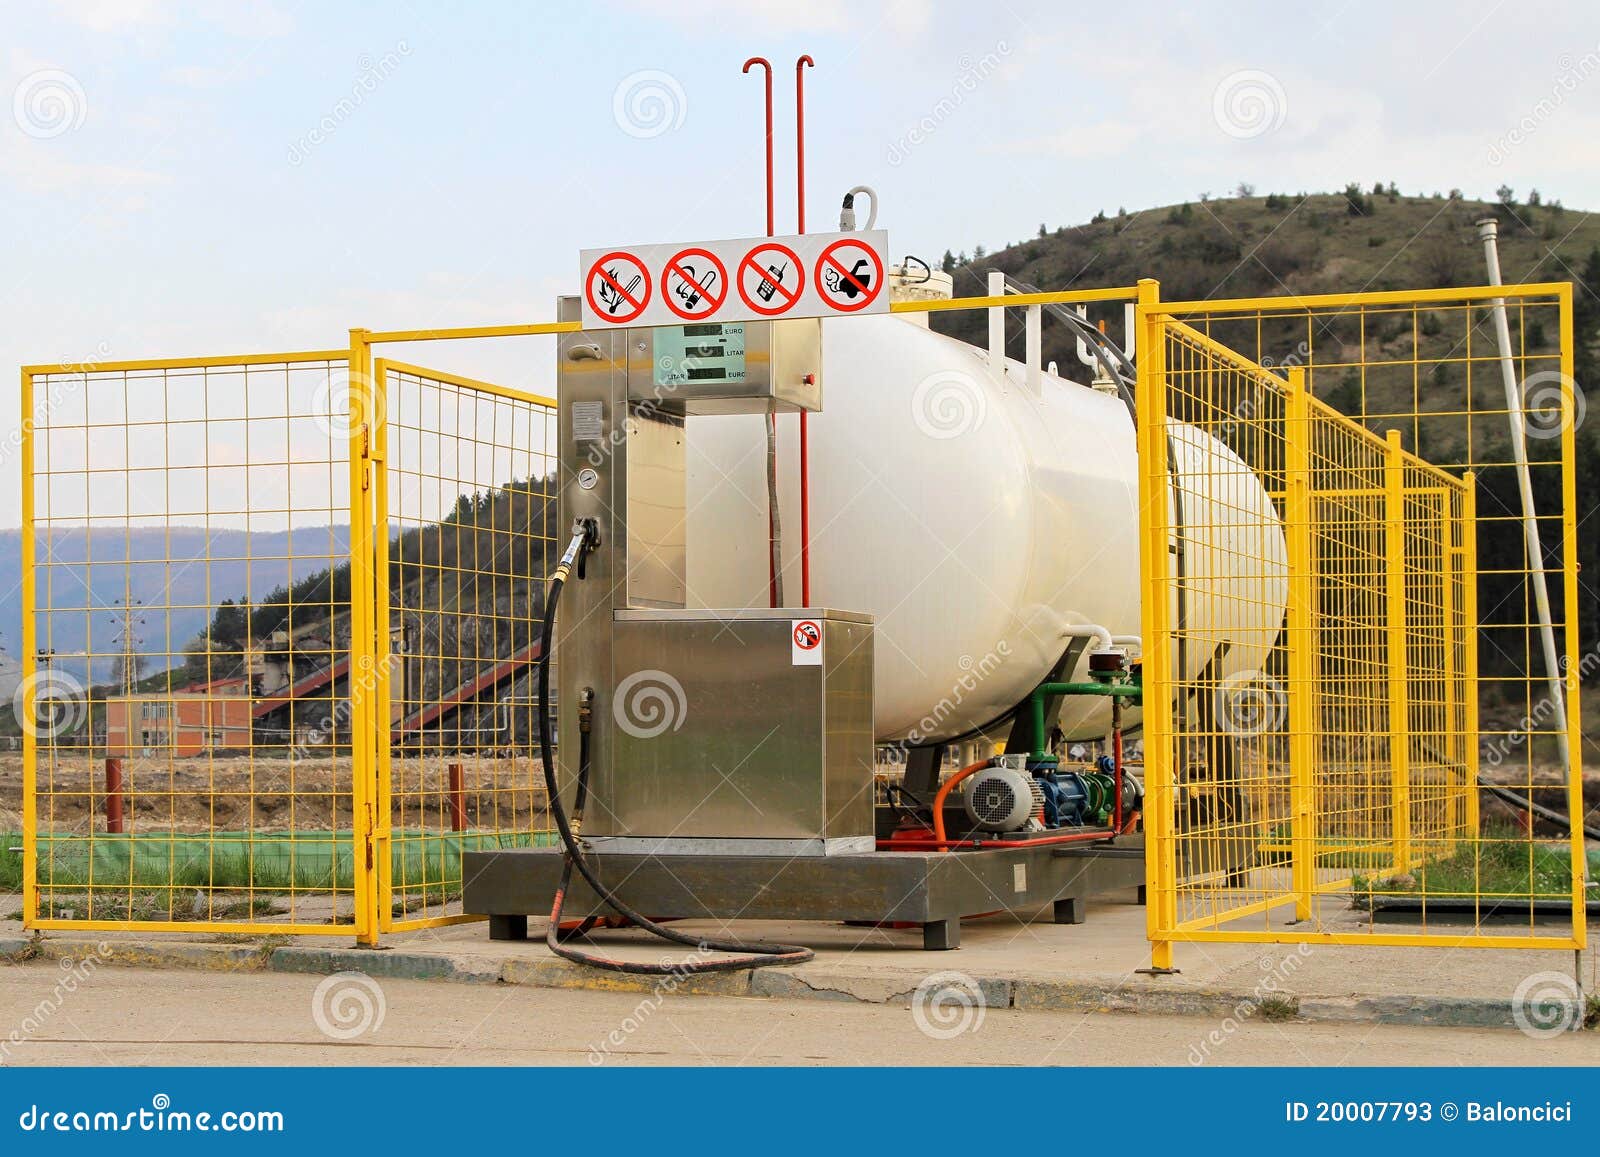 LPG petrol station stock image. Image of propane, reservoir - 20007793